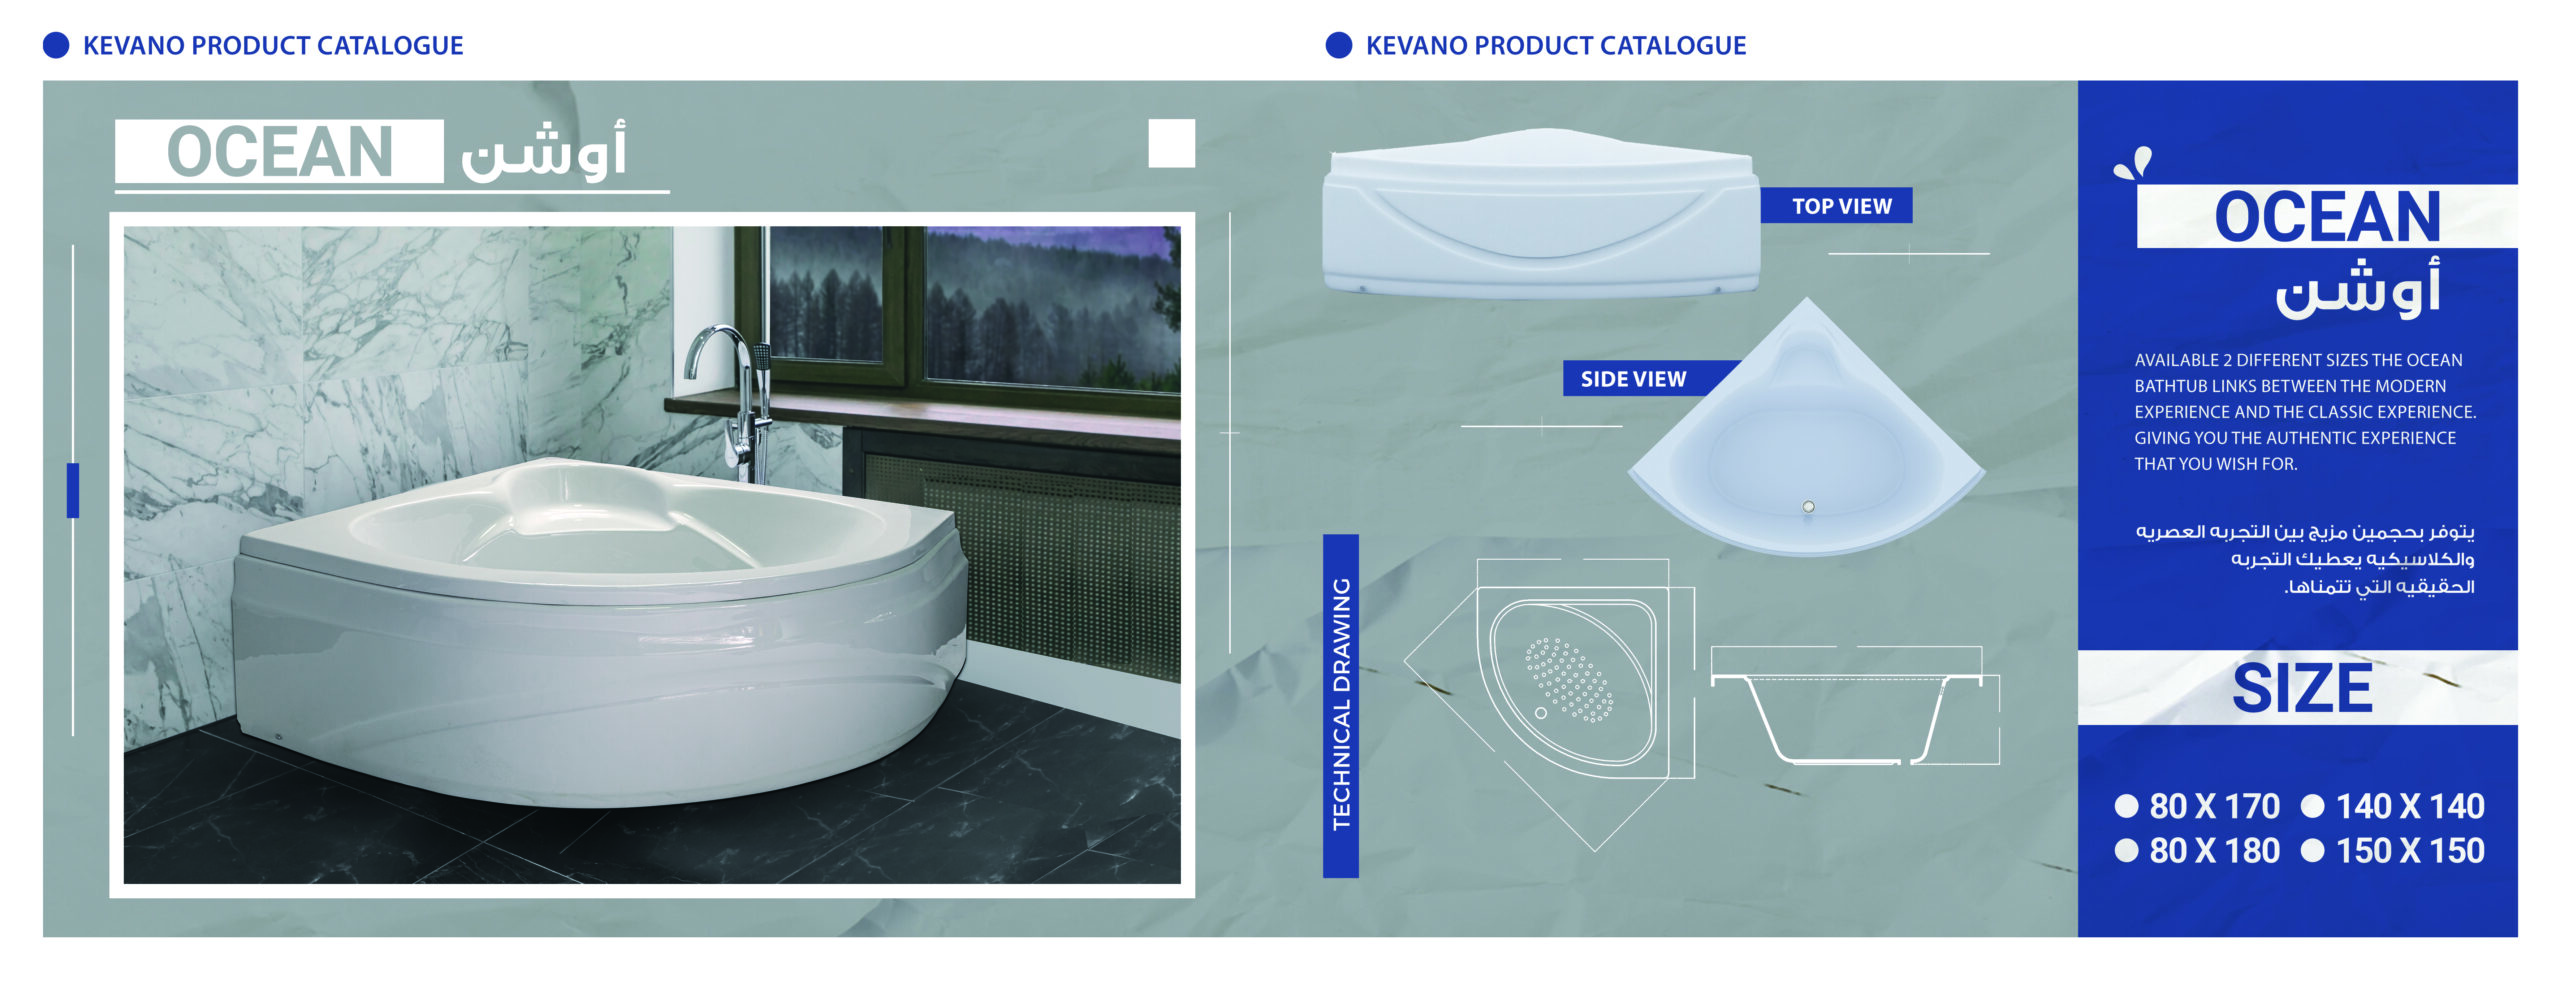 luxury-ocean-acrylic-bathtub-modern-classic-styles-kivano